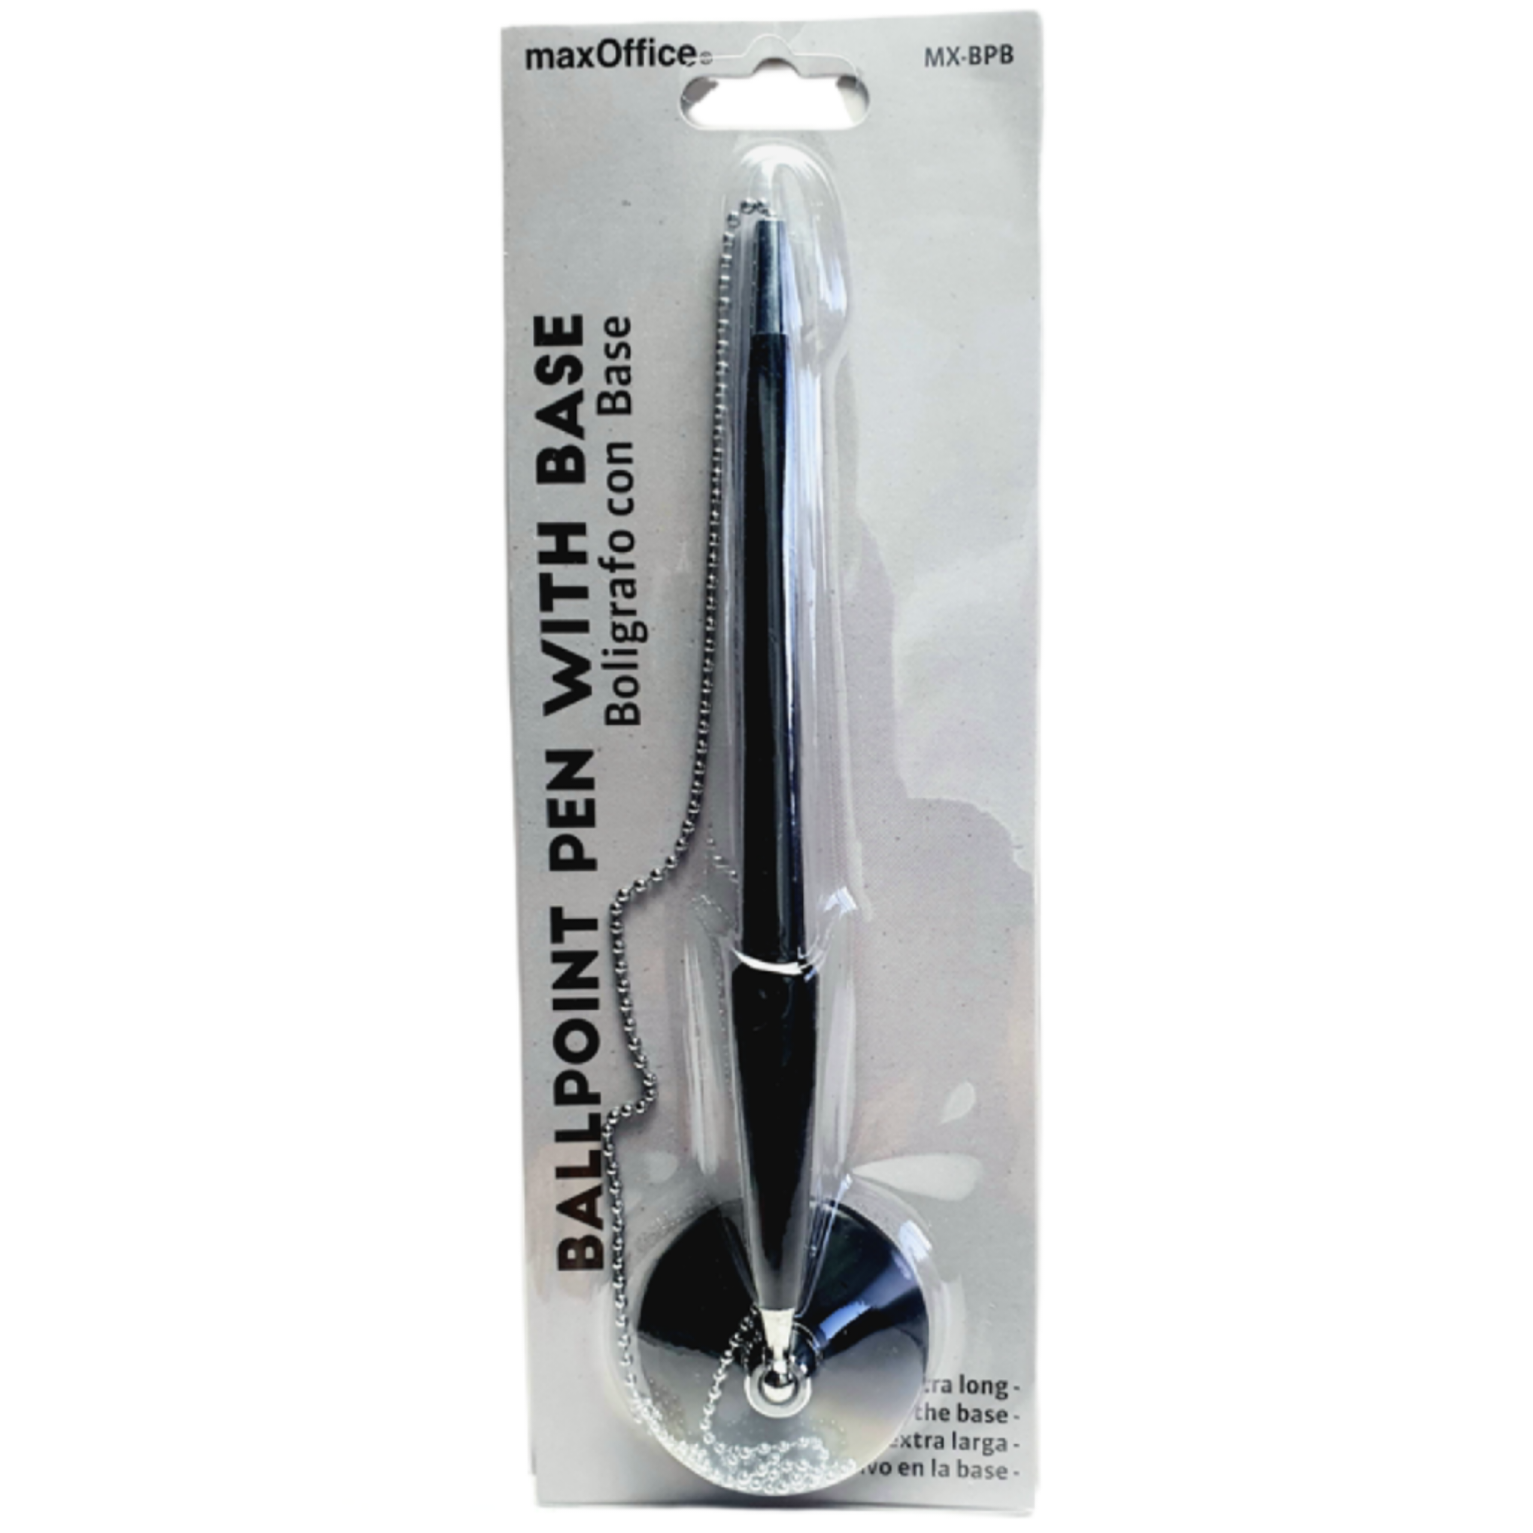 Bolígrafo con Cadena y Base Adhesiva en Blister, 1 mm, Tinta Azul - MX-BPB - maxOffice